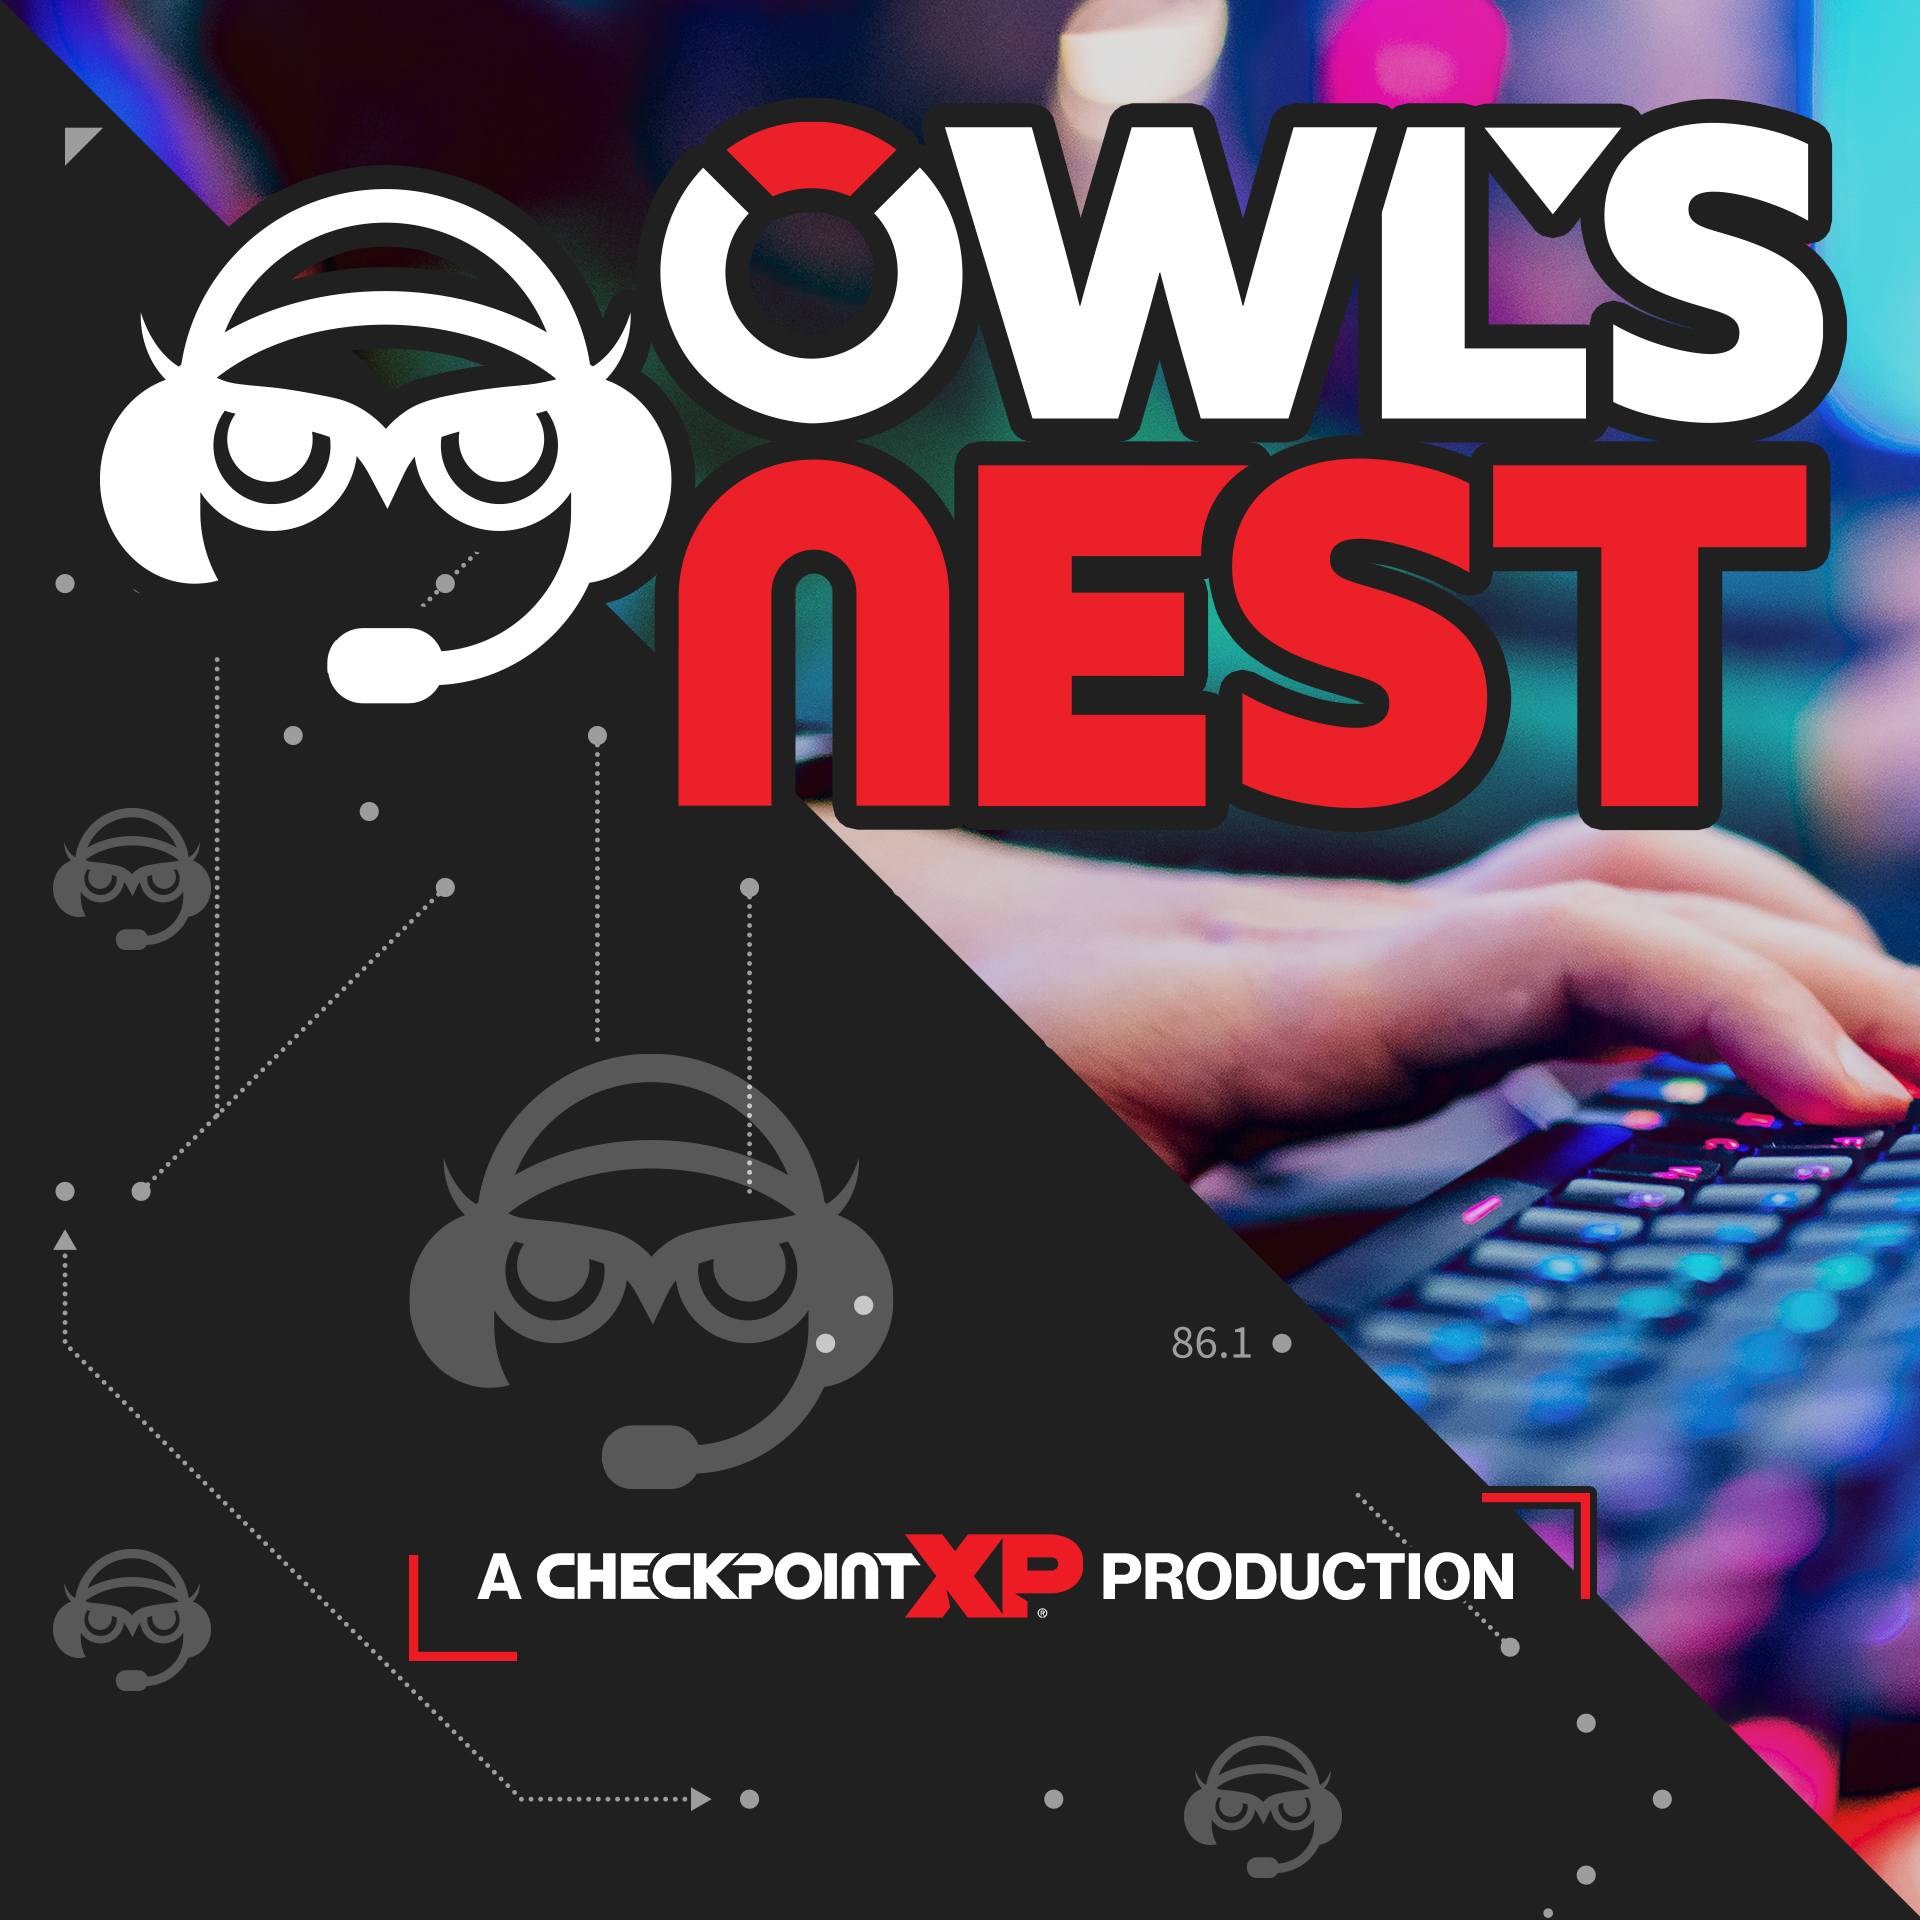 The OWLs Nest